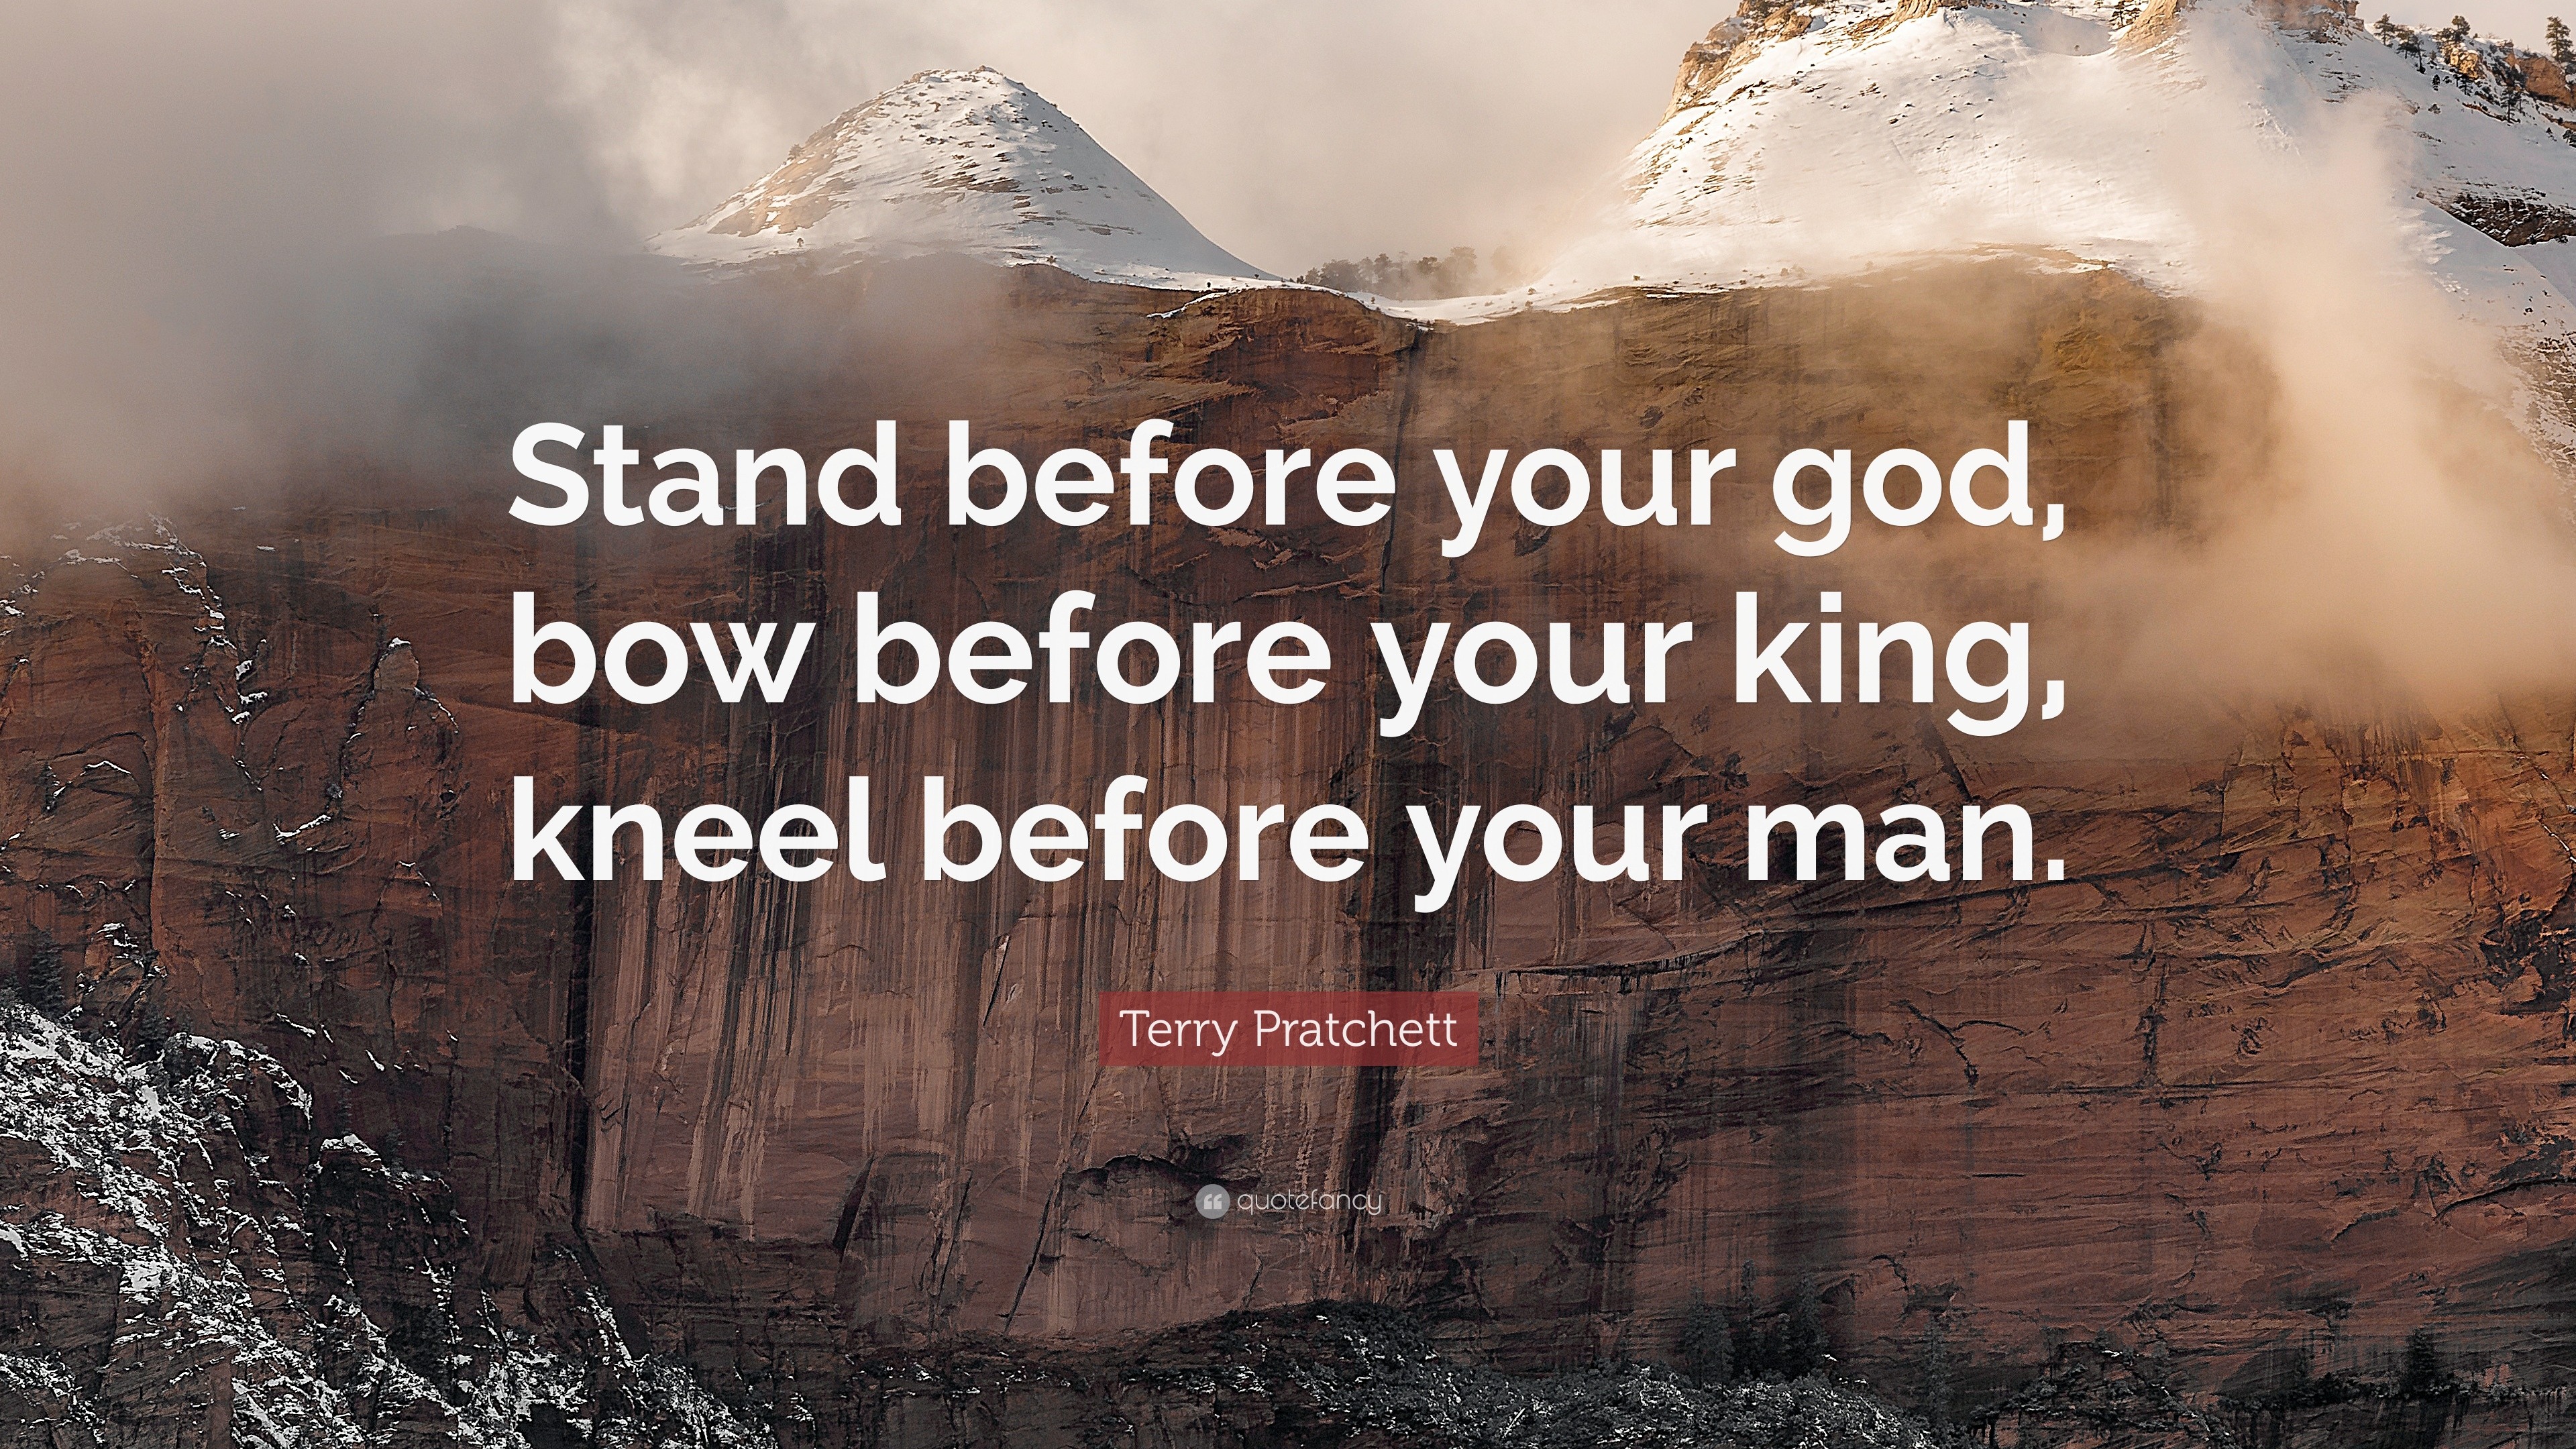 Kneel before your king..